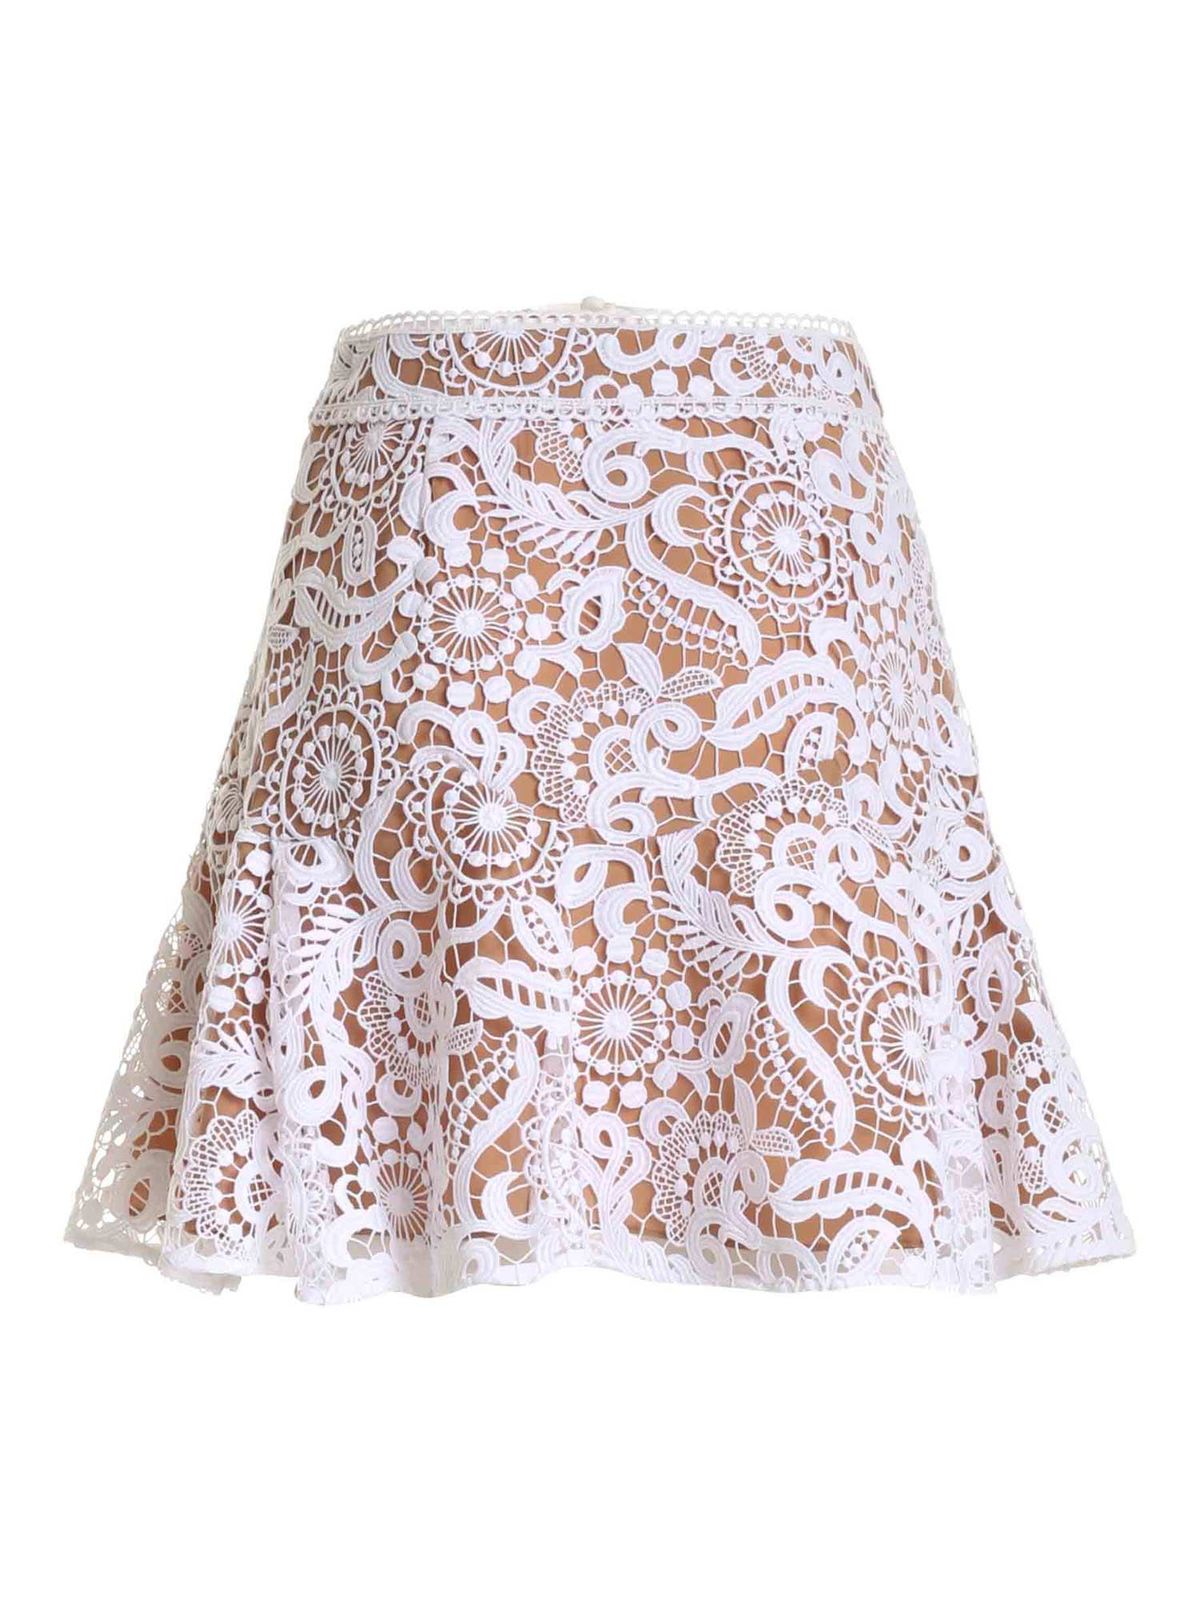 mk lace skirt